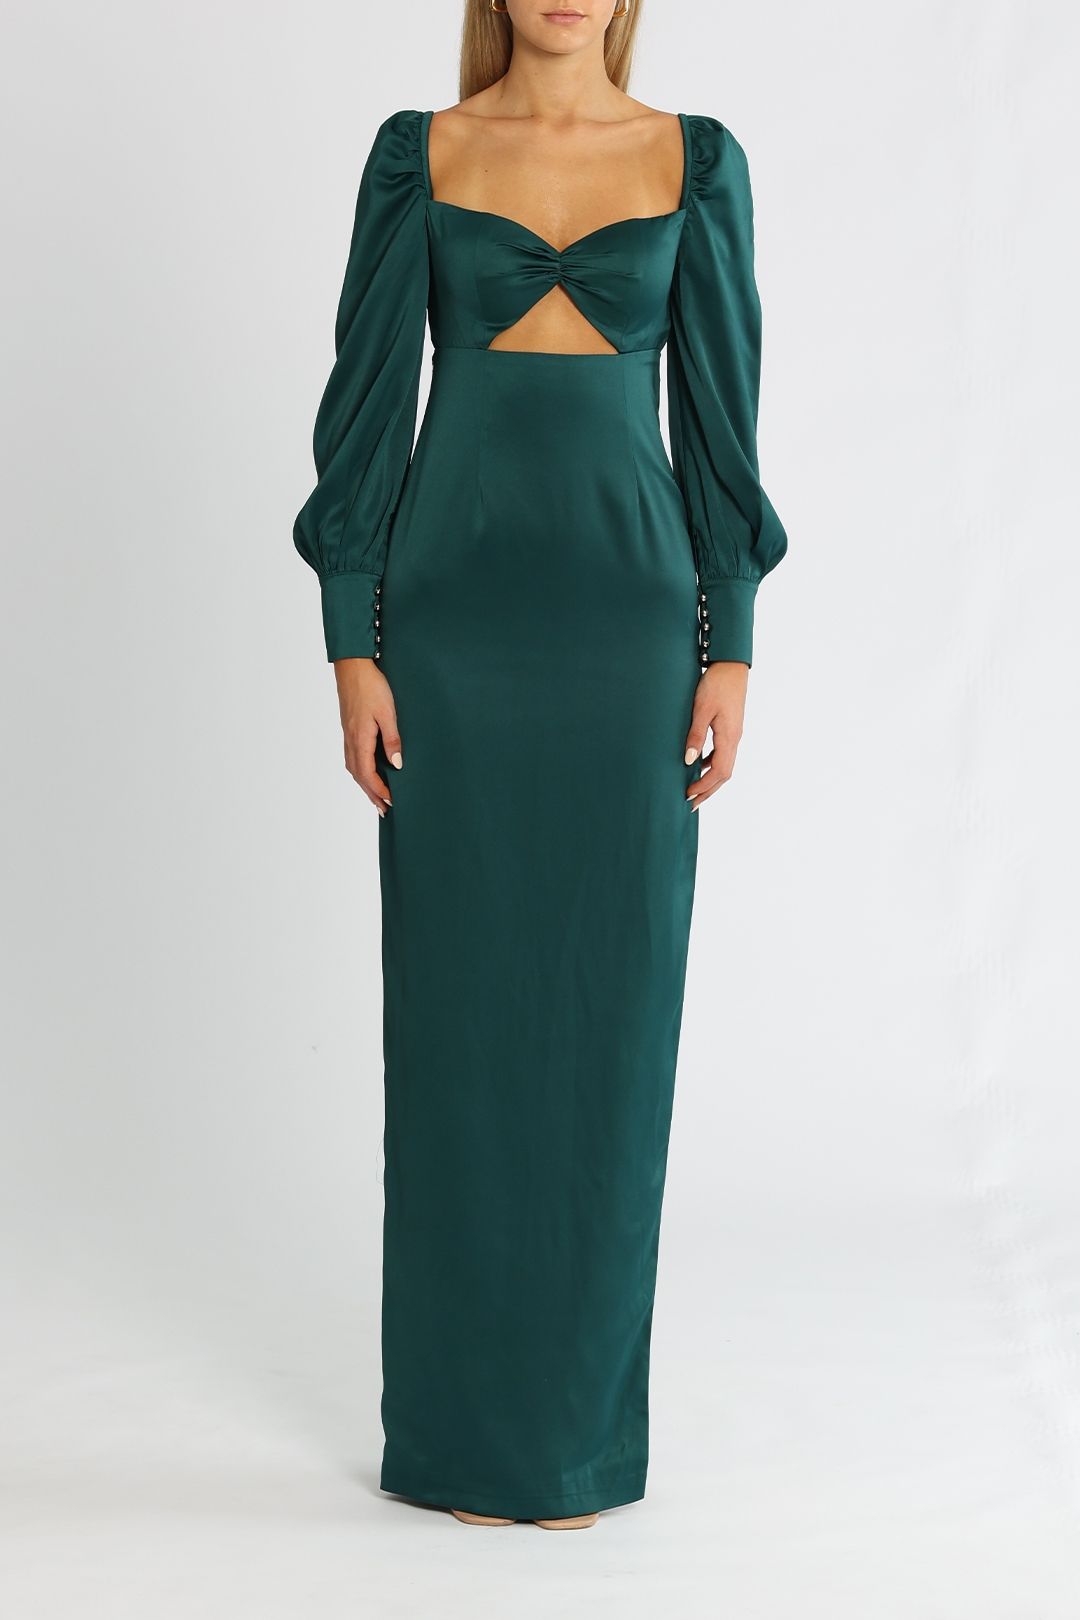 YOURS LONDON Plus Size Emerald Green Lace Sweetheart Midi Dress